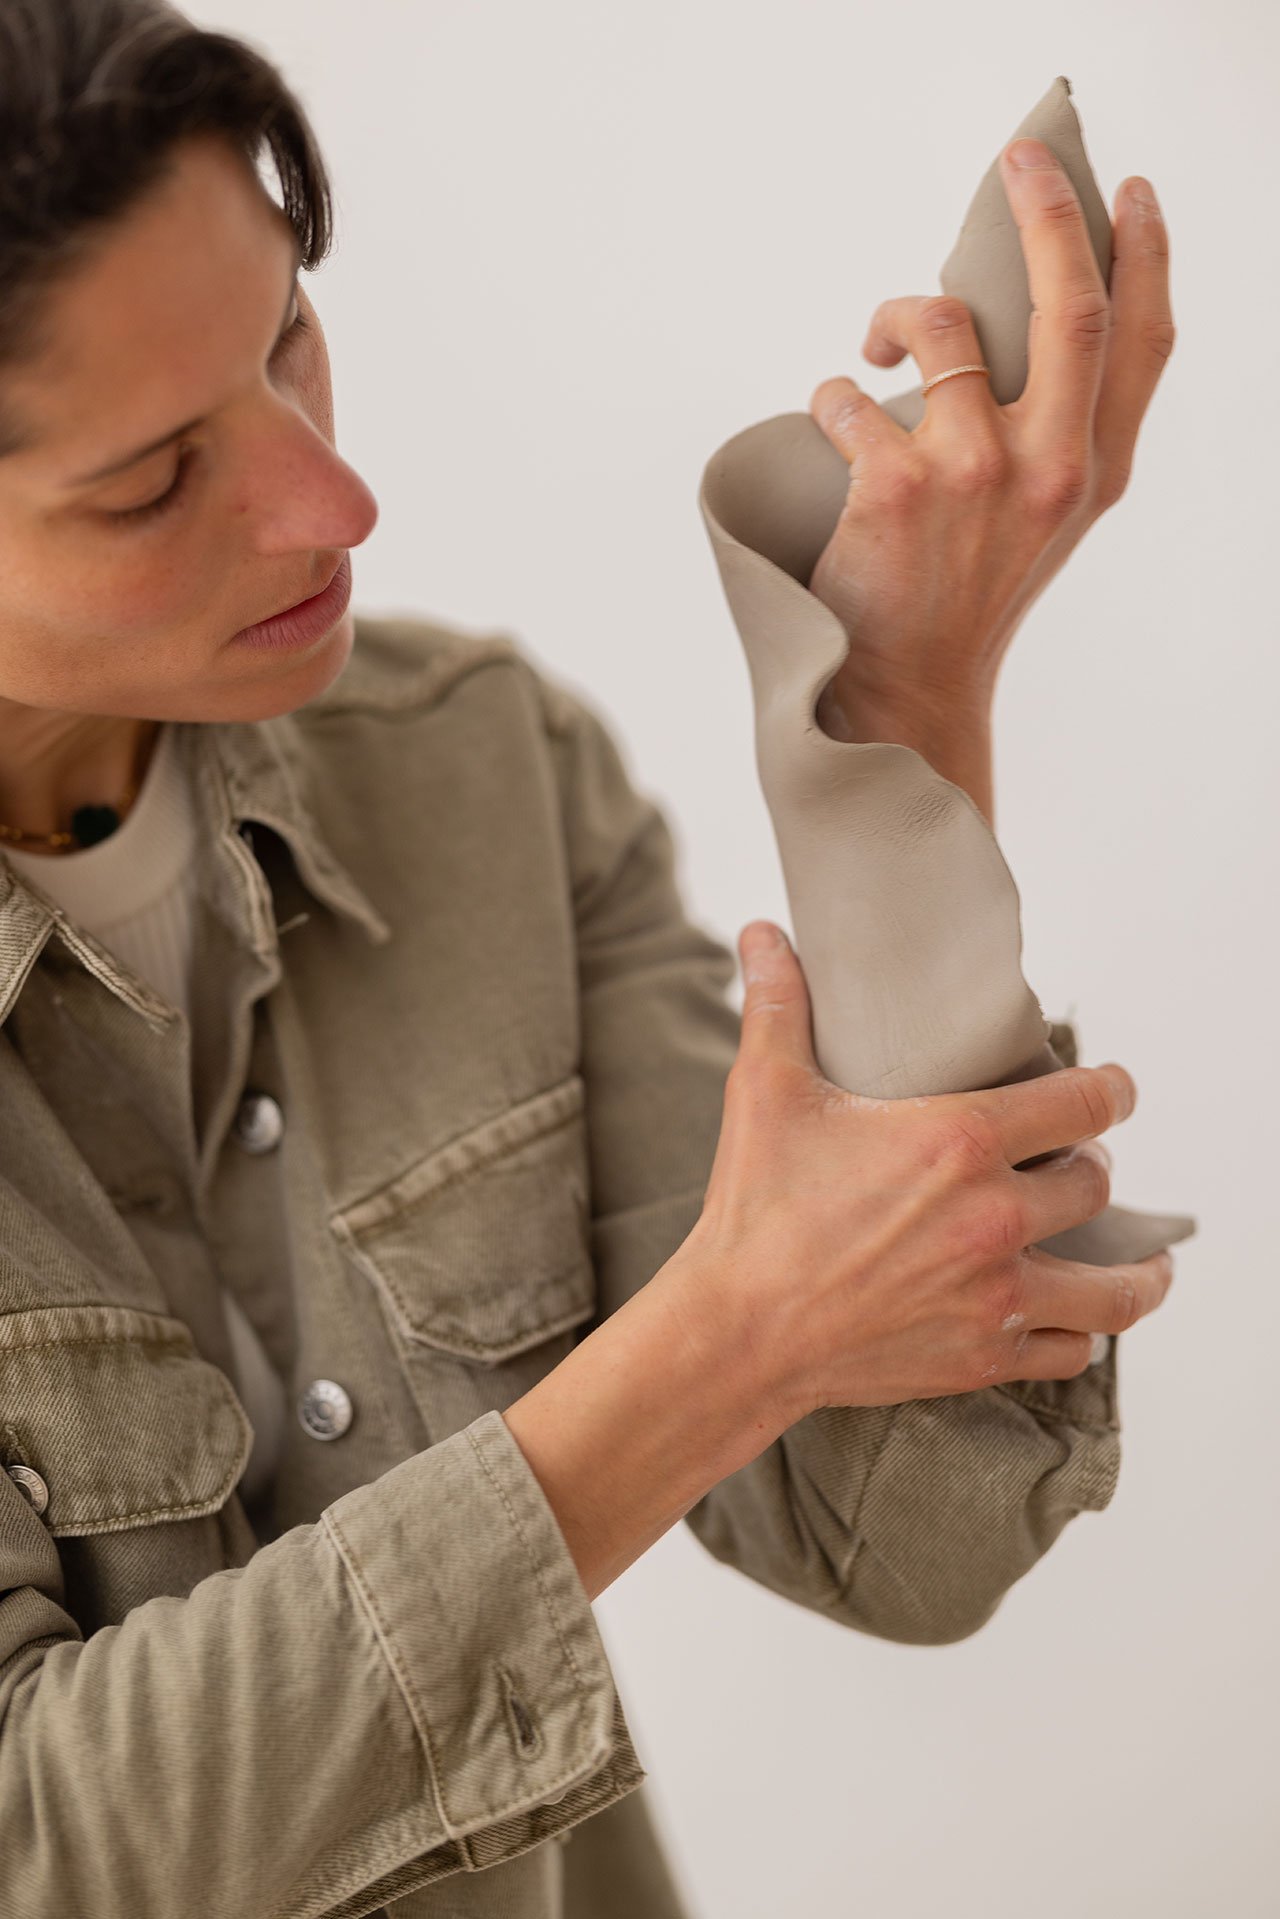 Ceramic artwork by Studio Ēeme © Marie-Laure Davy.